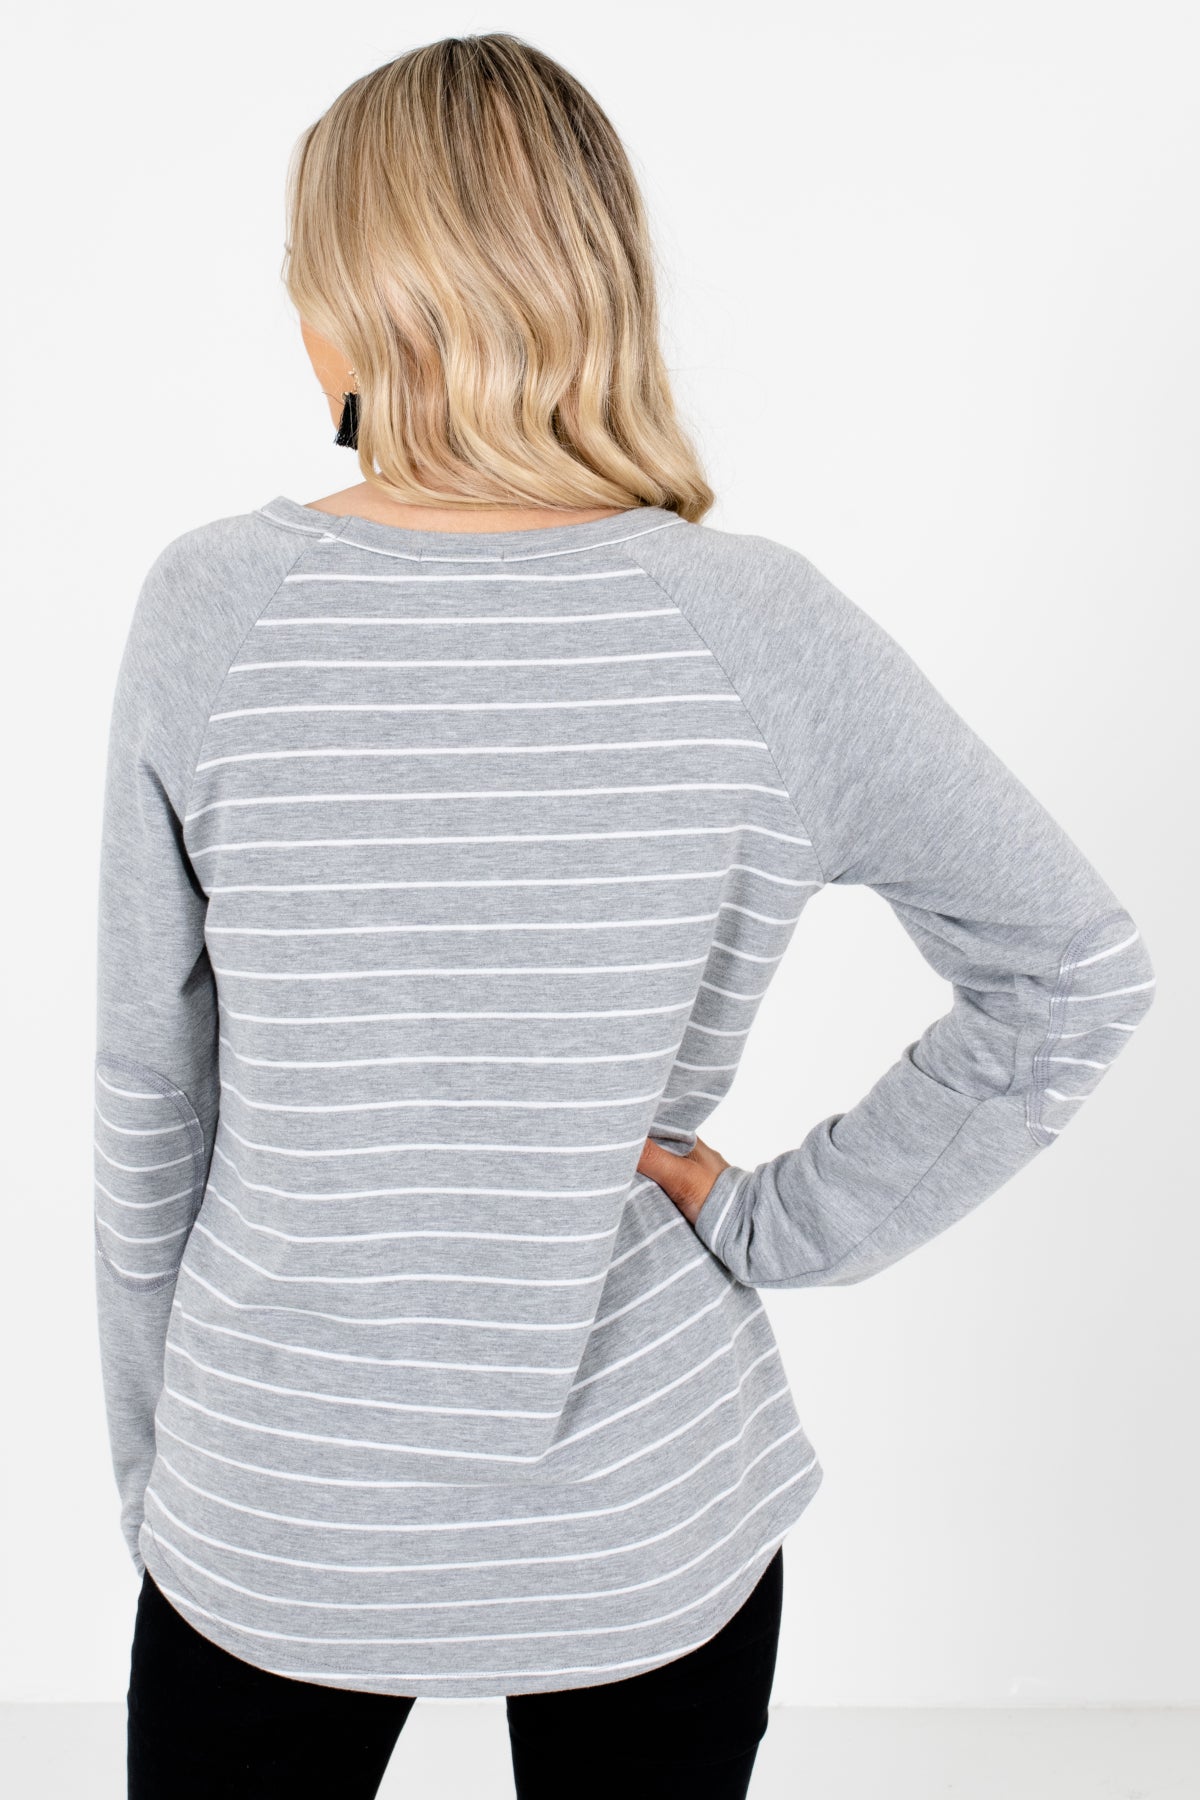 Women's Gray Long Sleeve Boutique Tops